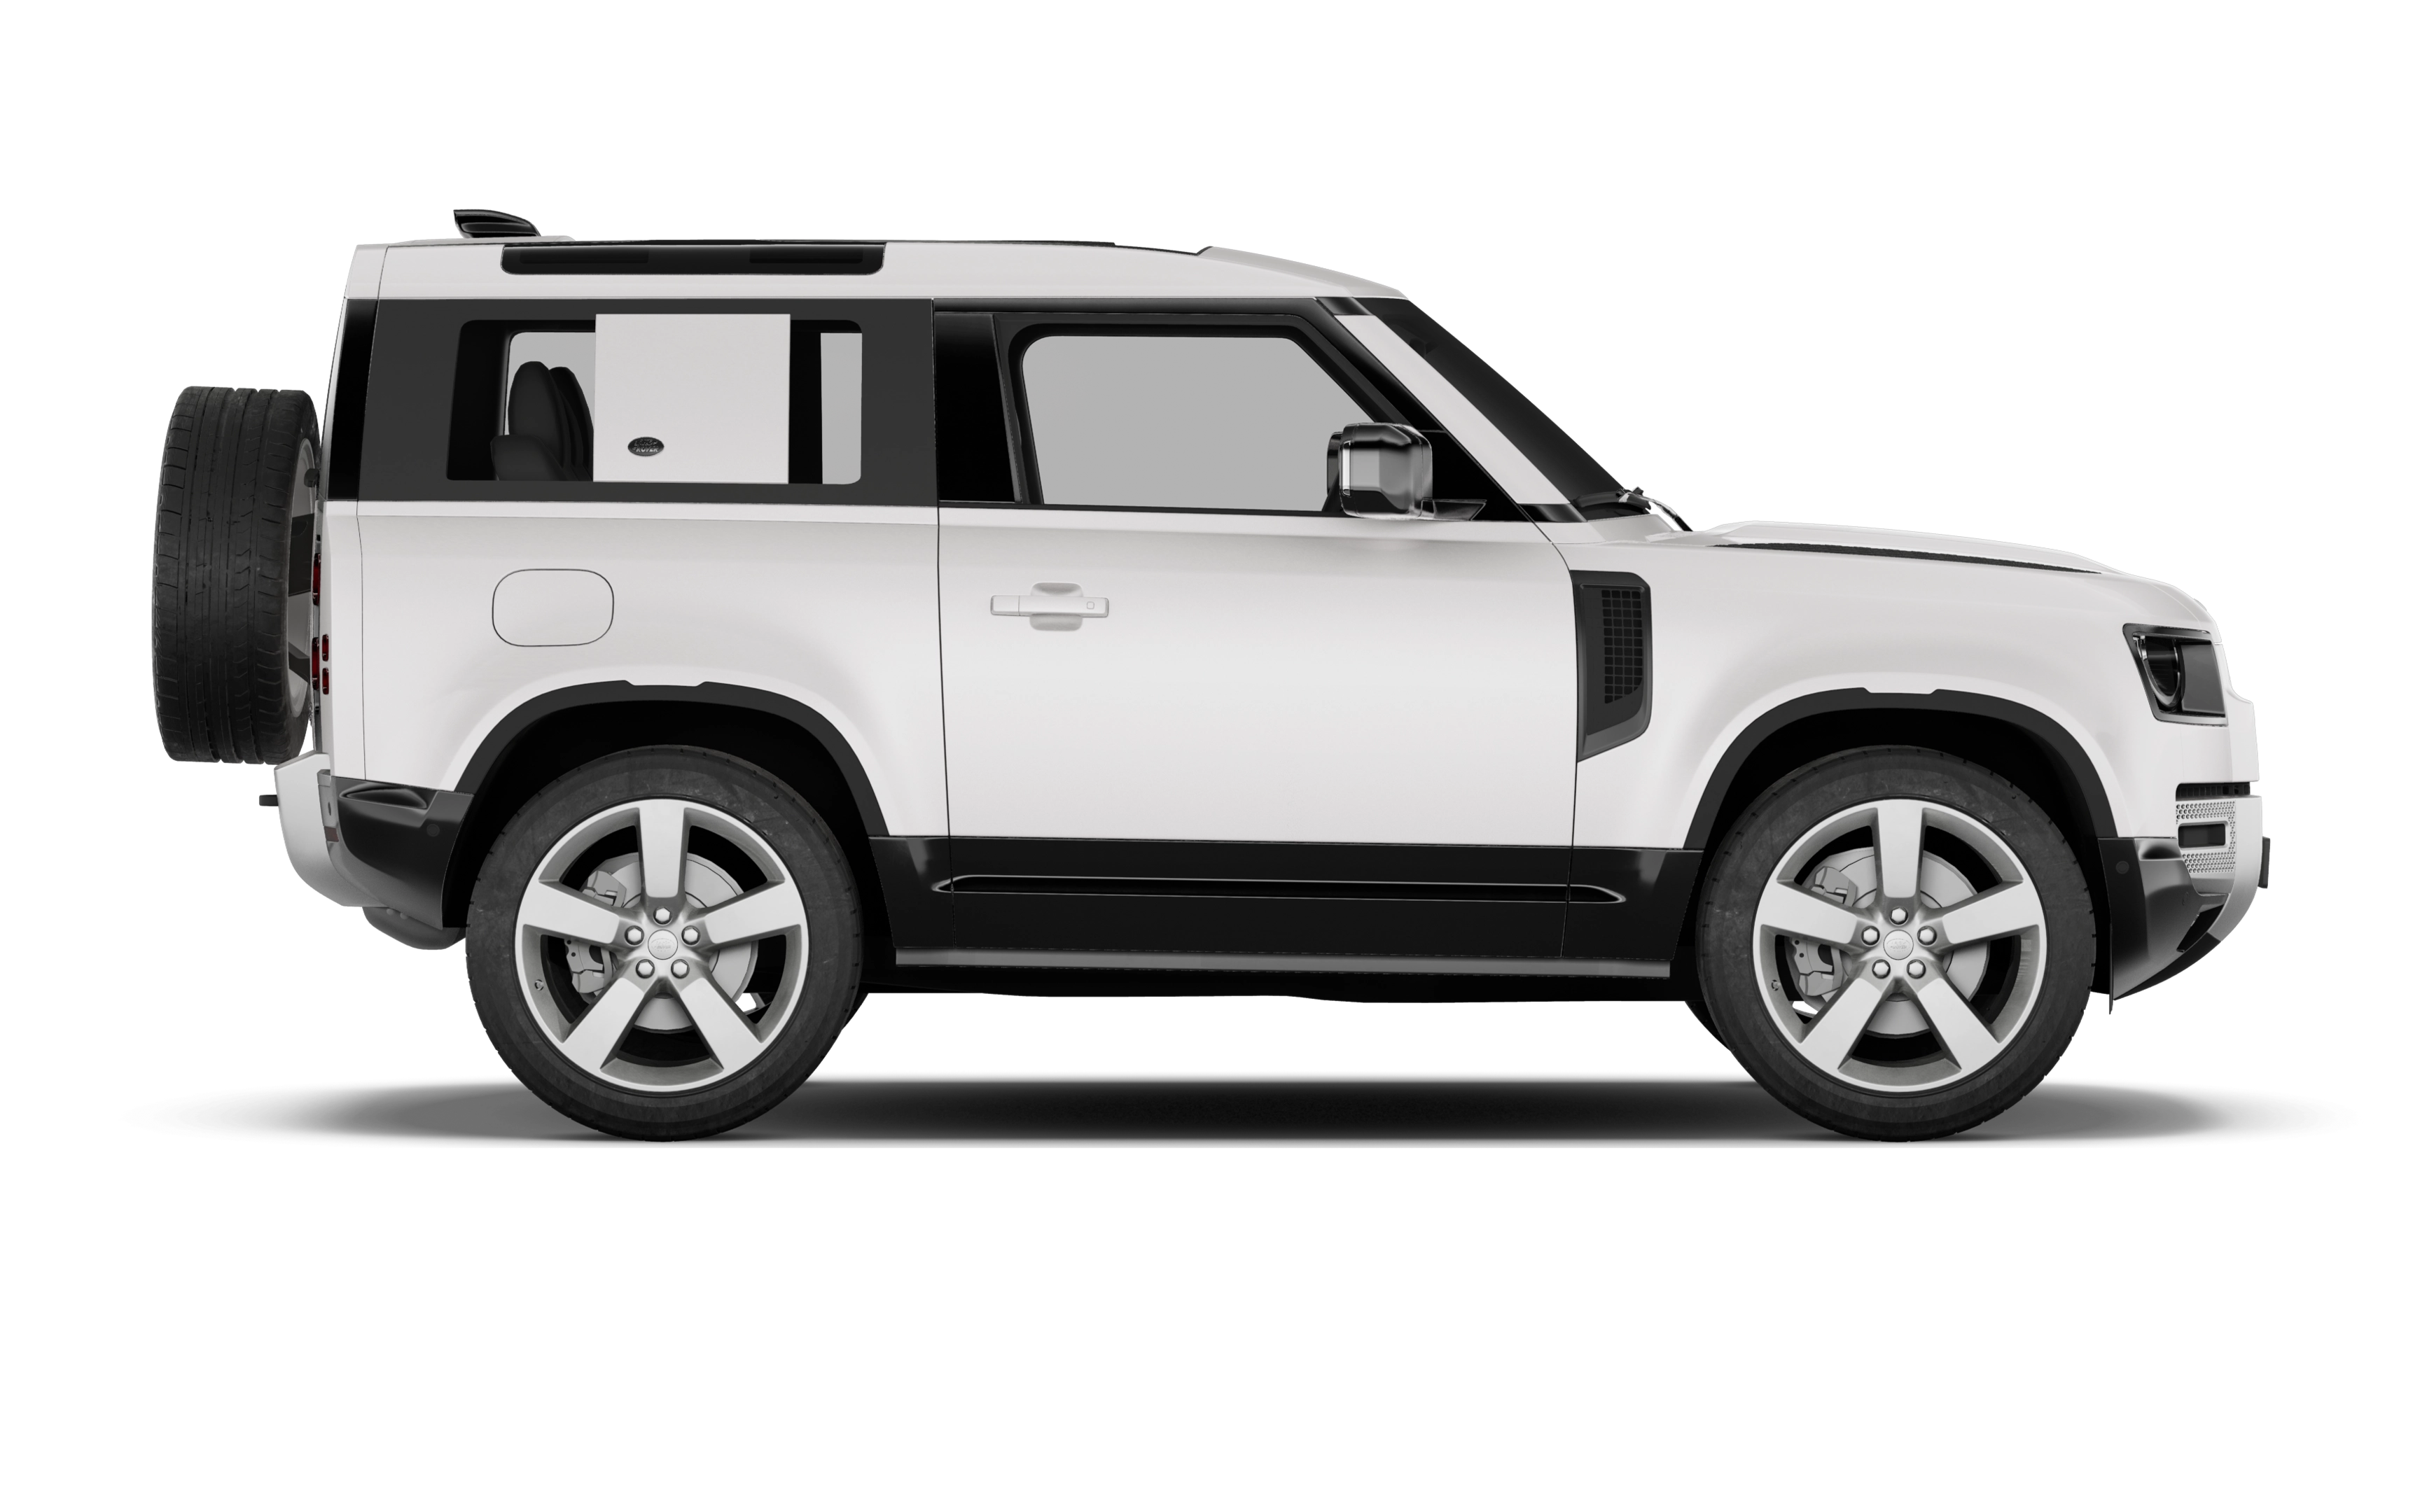 Land rover defender estate 3.0 p400 xs edition 110 5 doors auto [7 seat]